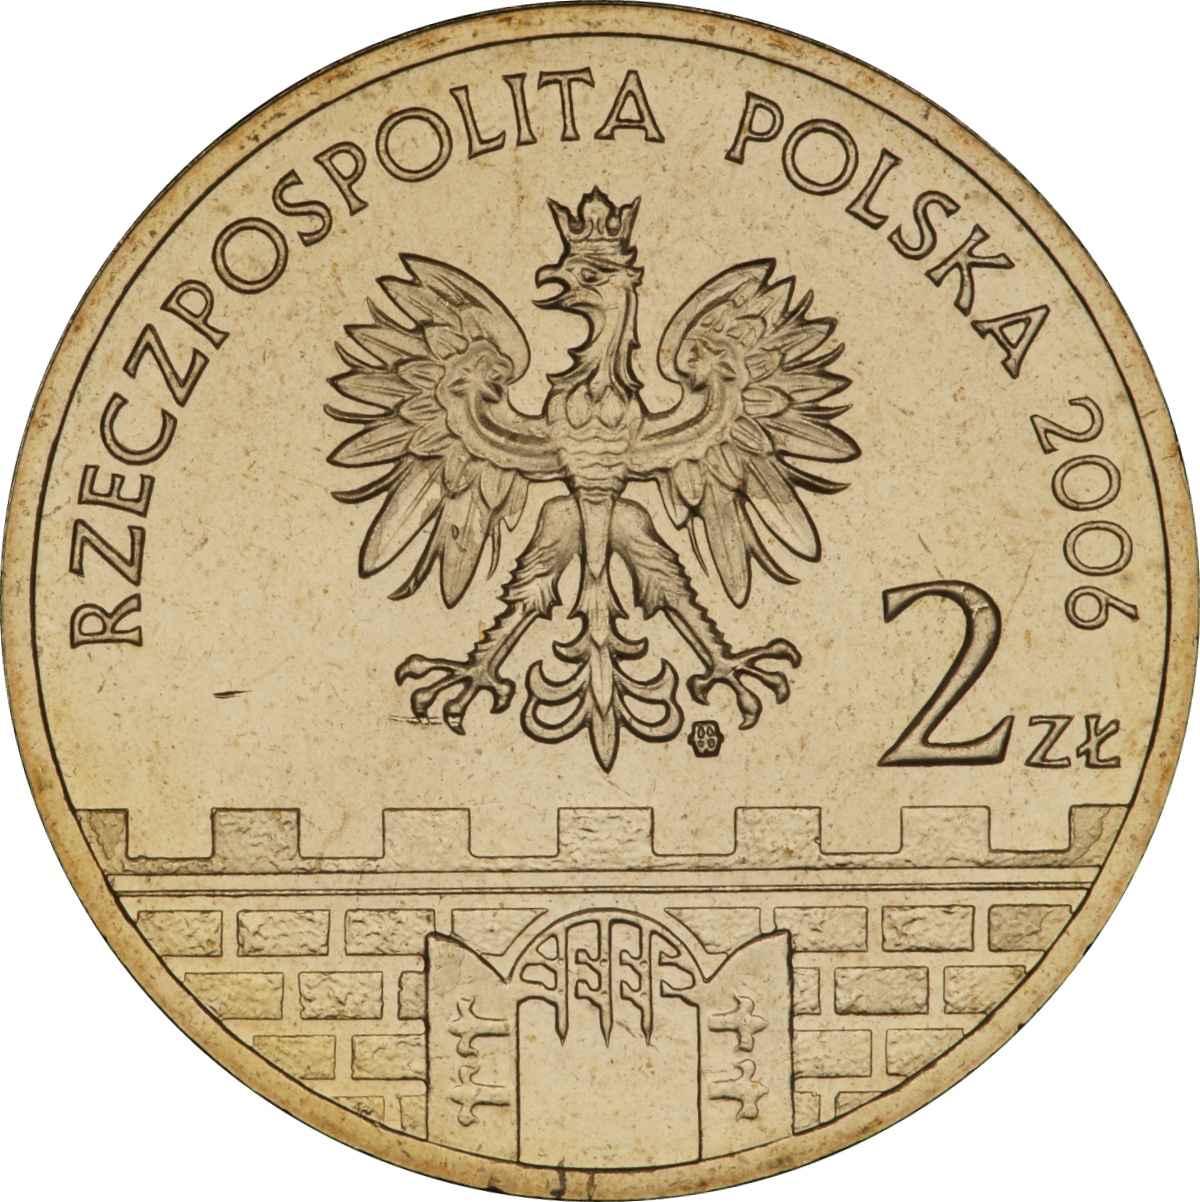 2zl-kalisz-awers-monety